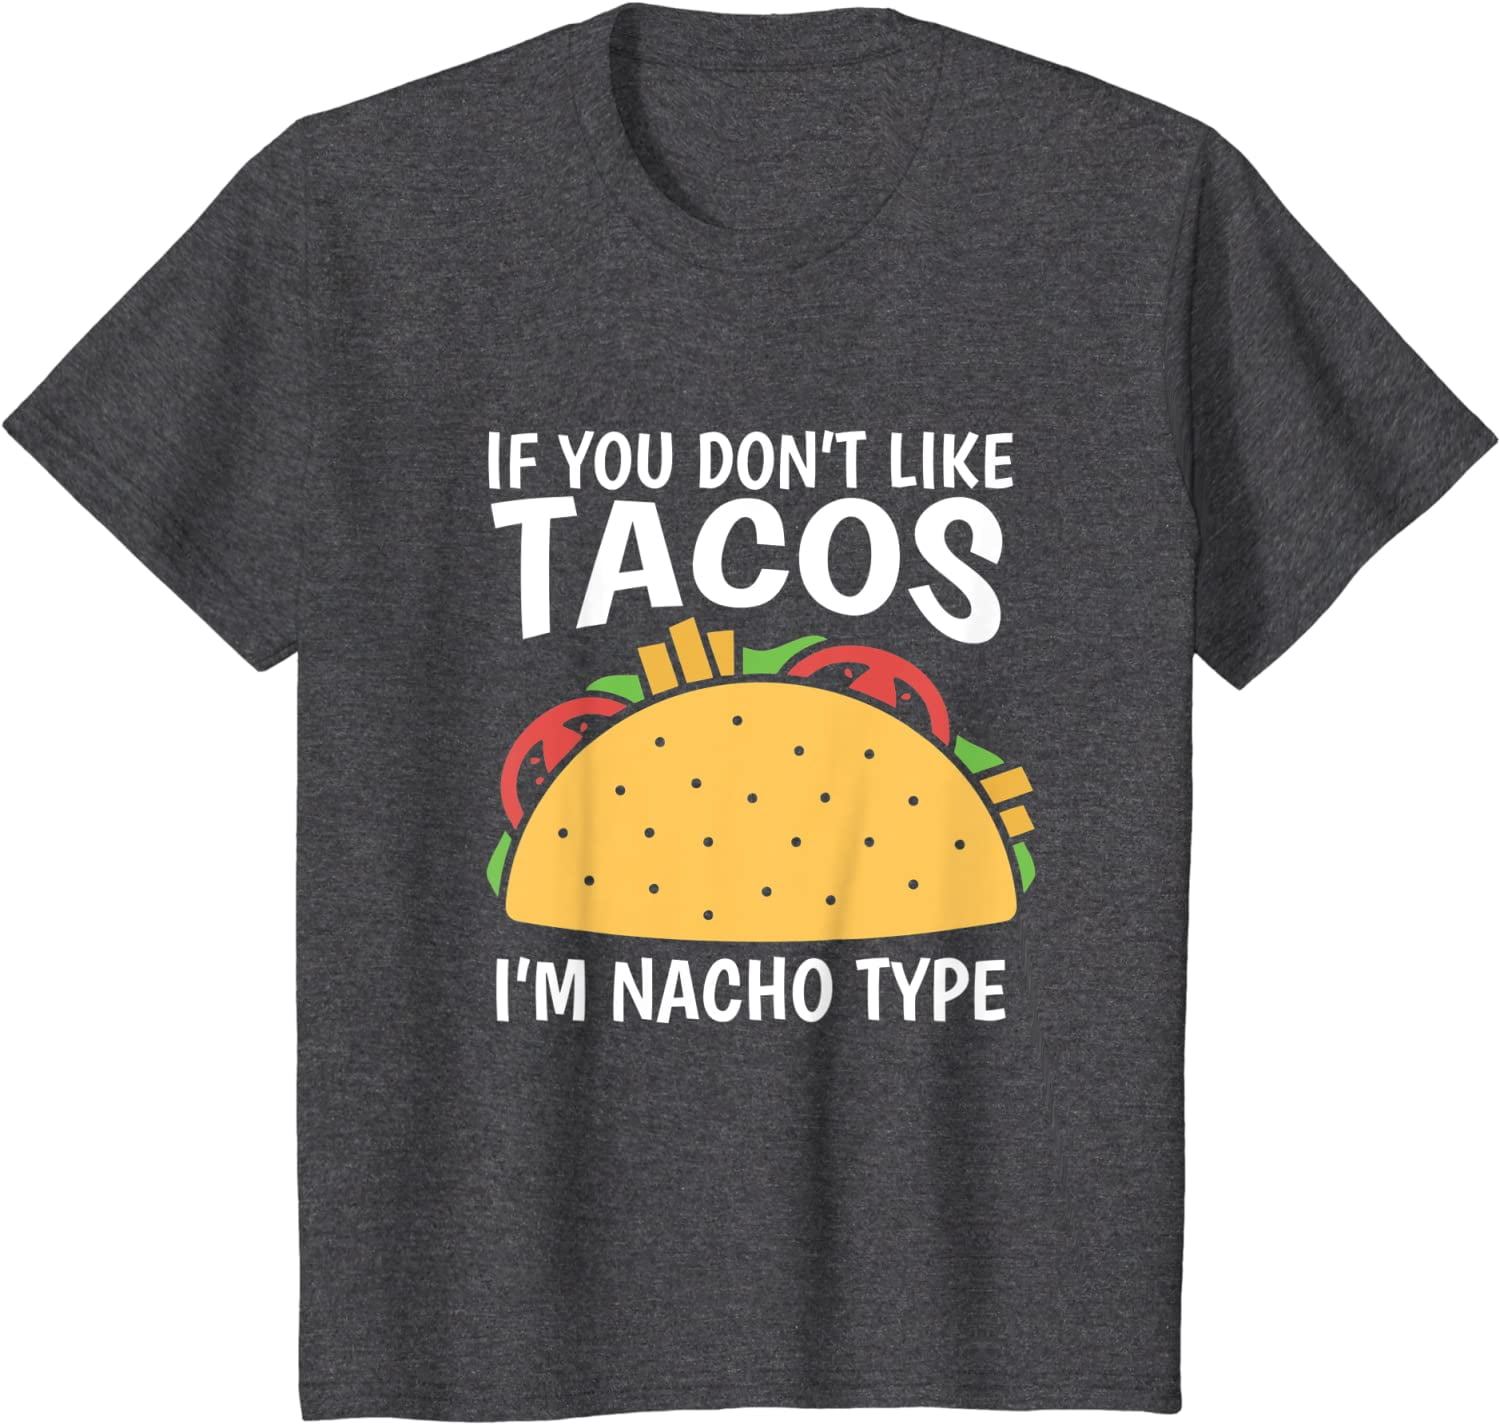 If You Don't Like Tacos I'm Nacho Type Shirt - Tacos Nacho T-Shirt ...